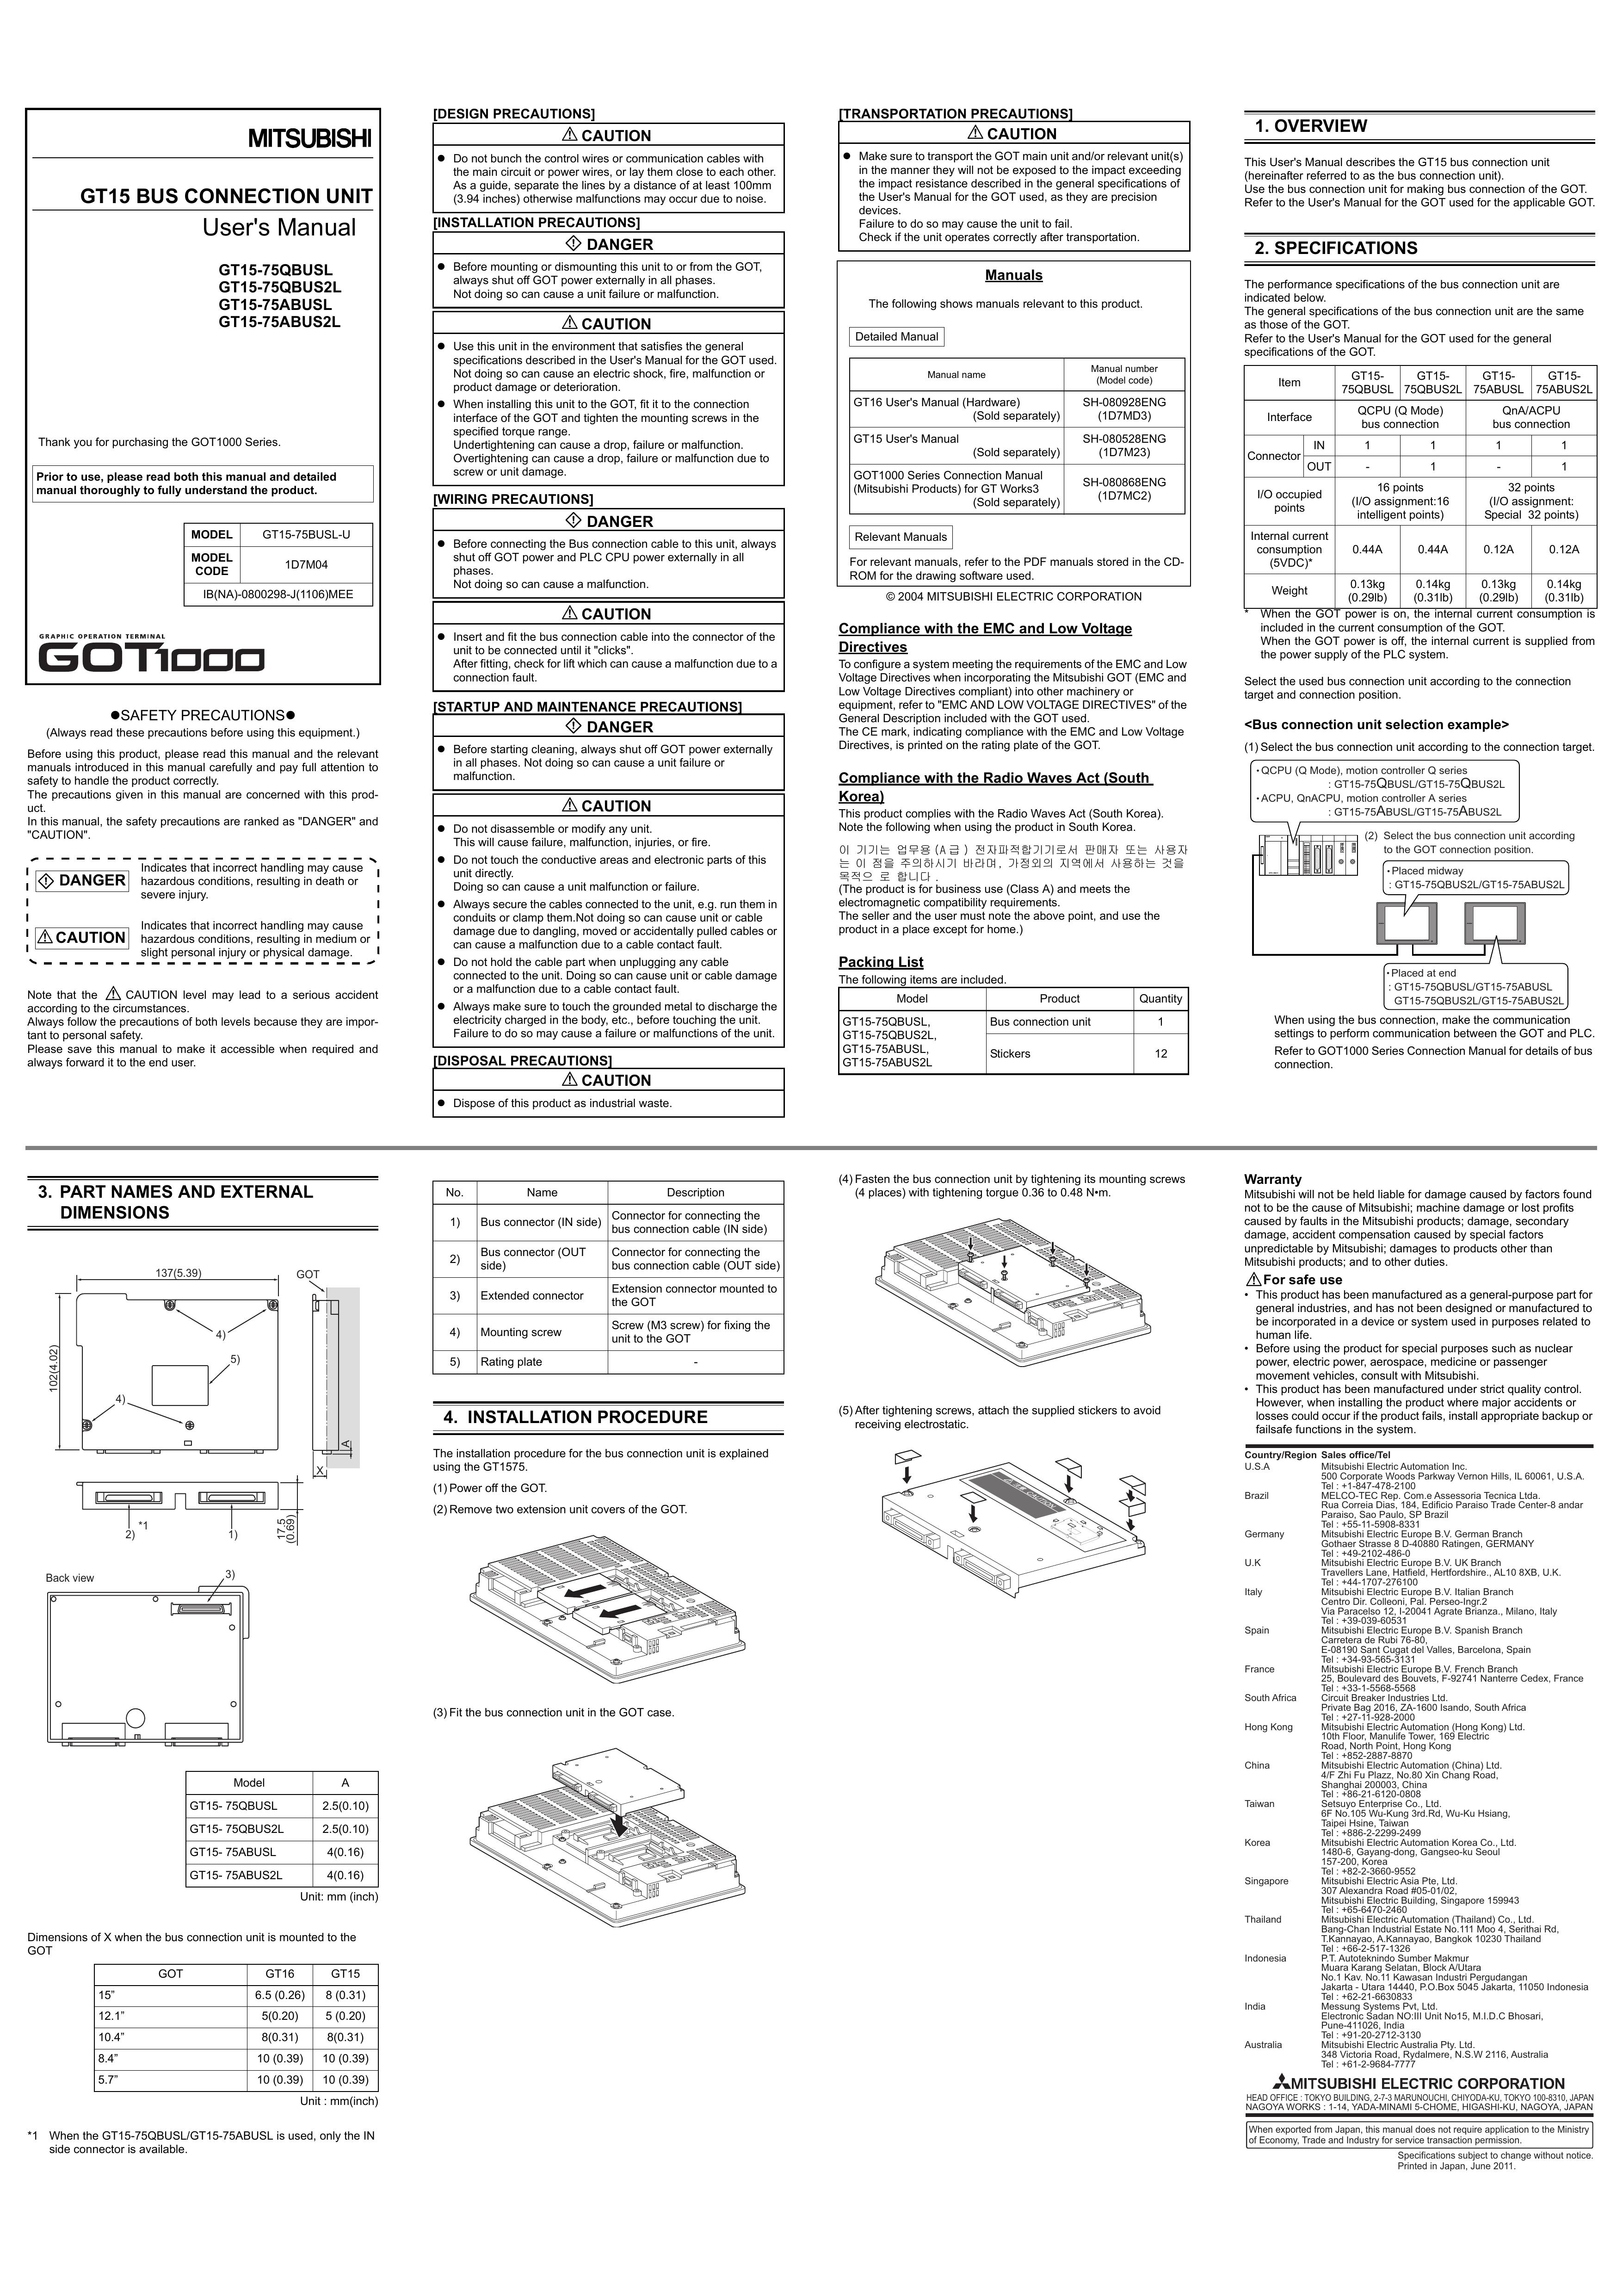 Mitsubishi Electronics GT15-75ABUS2L Insect Control Equipment User Manual